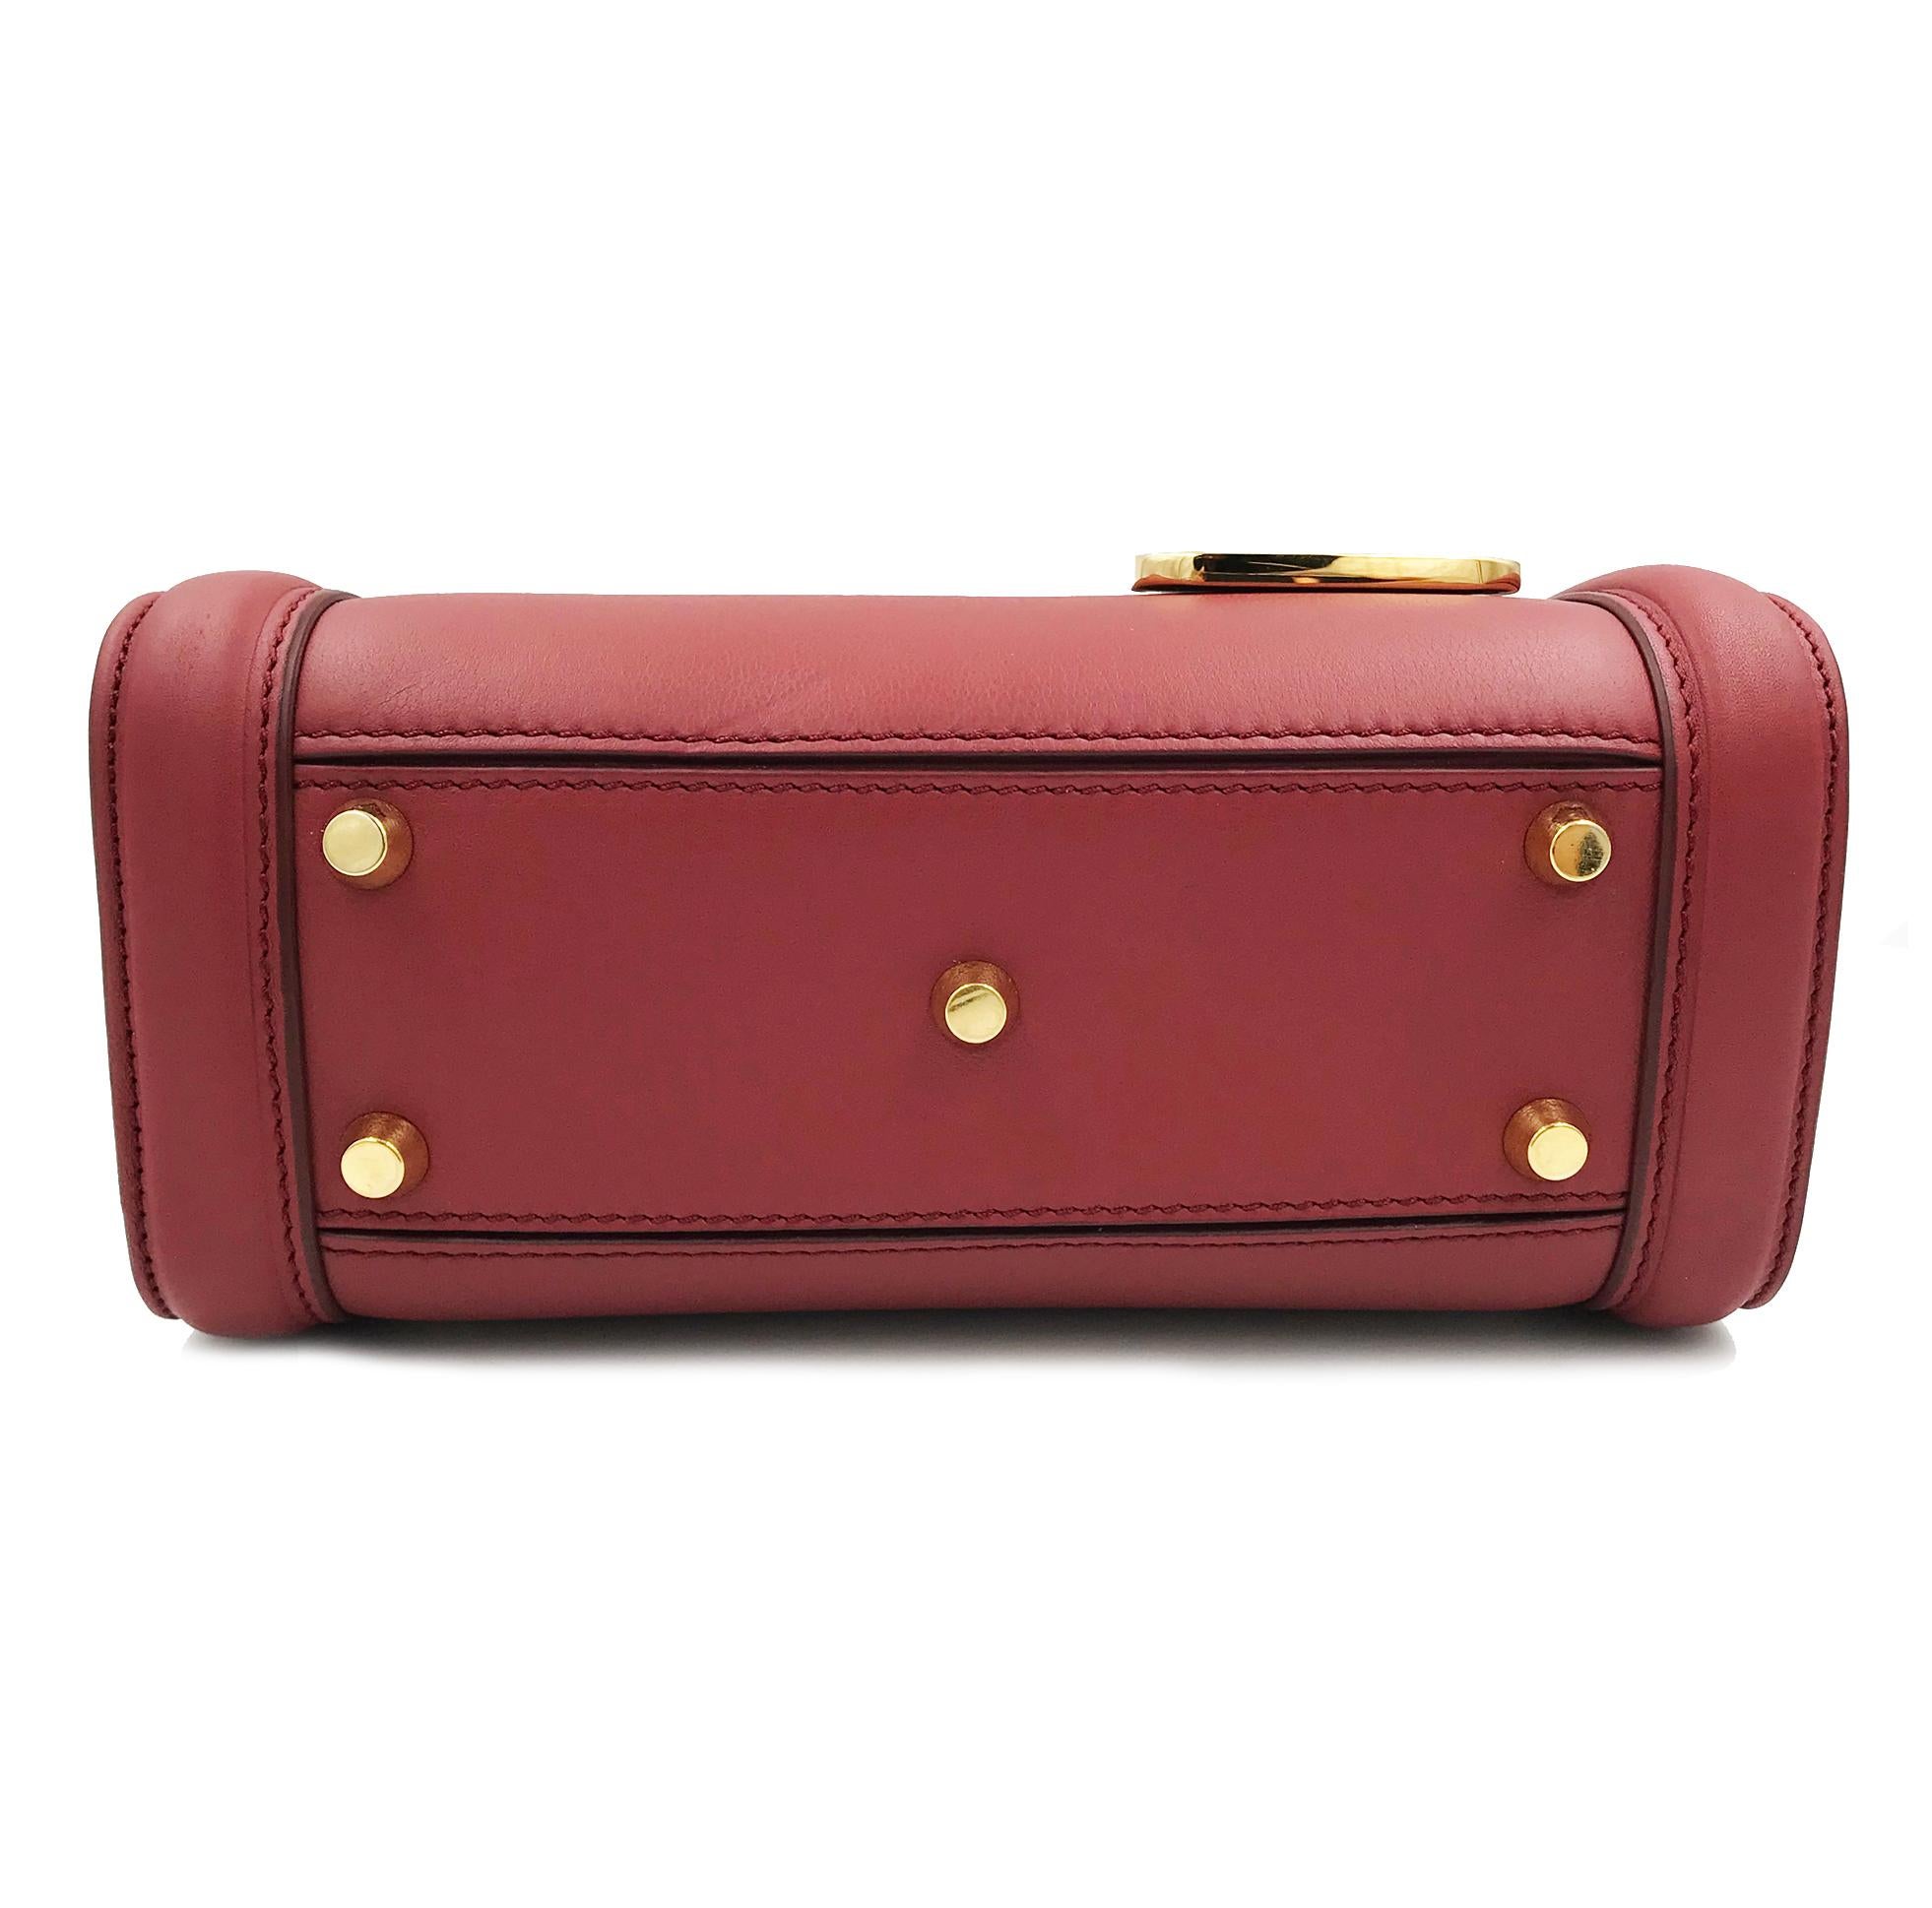 Alexander McQueen Heroine 21 Dark Red Italian Satchel Ladies Bag 47987DX50M In Excellent Condition For Sale In New York, NY